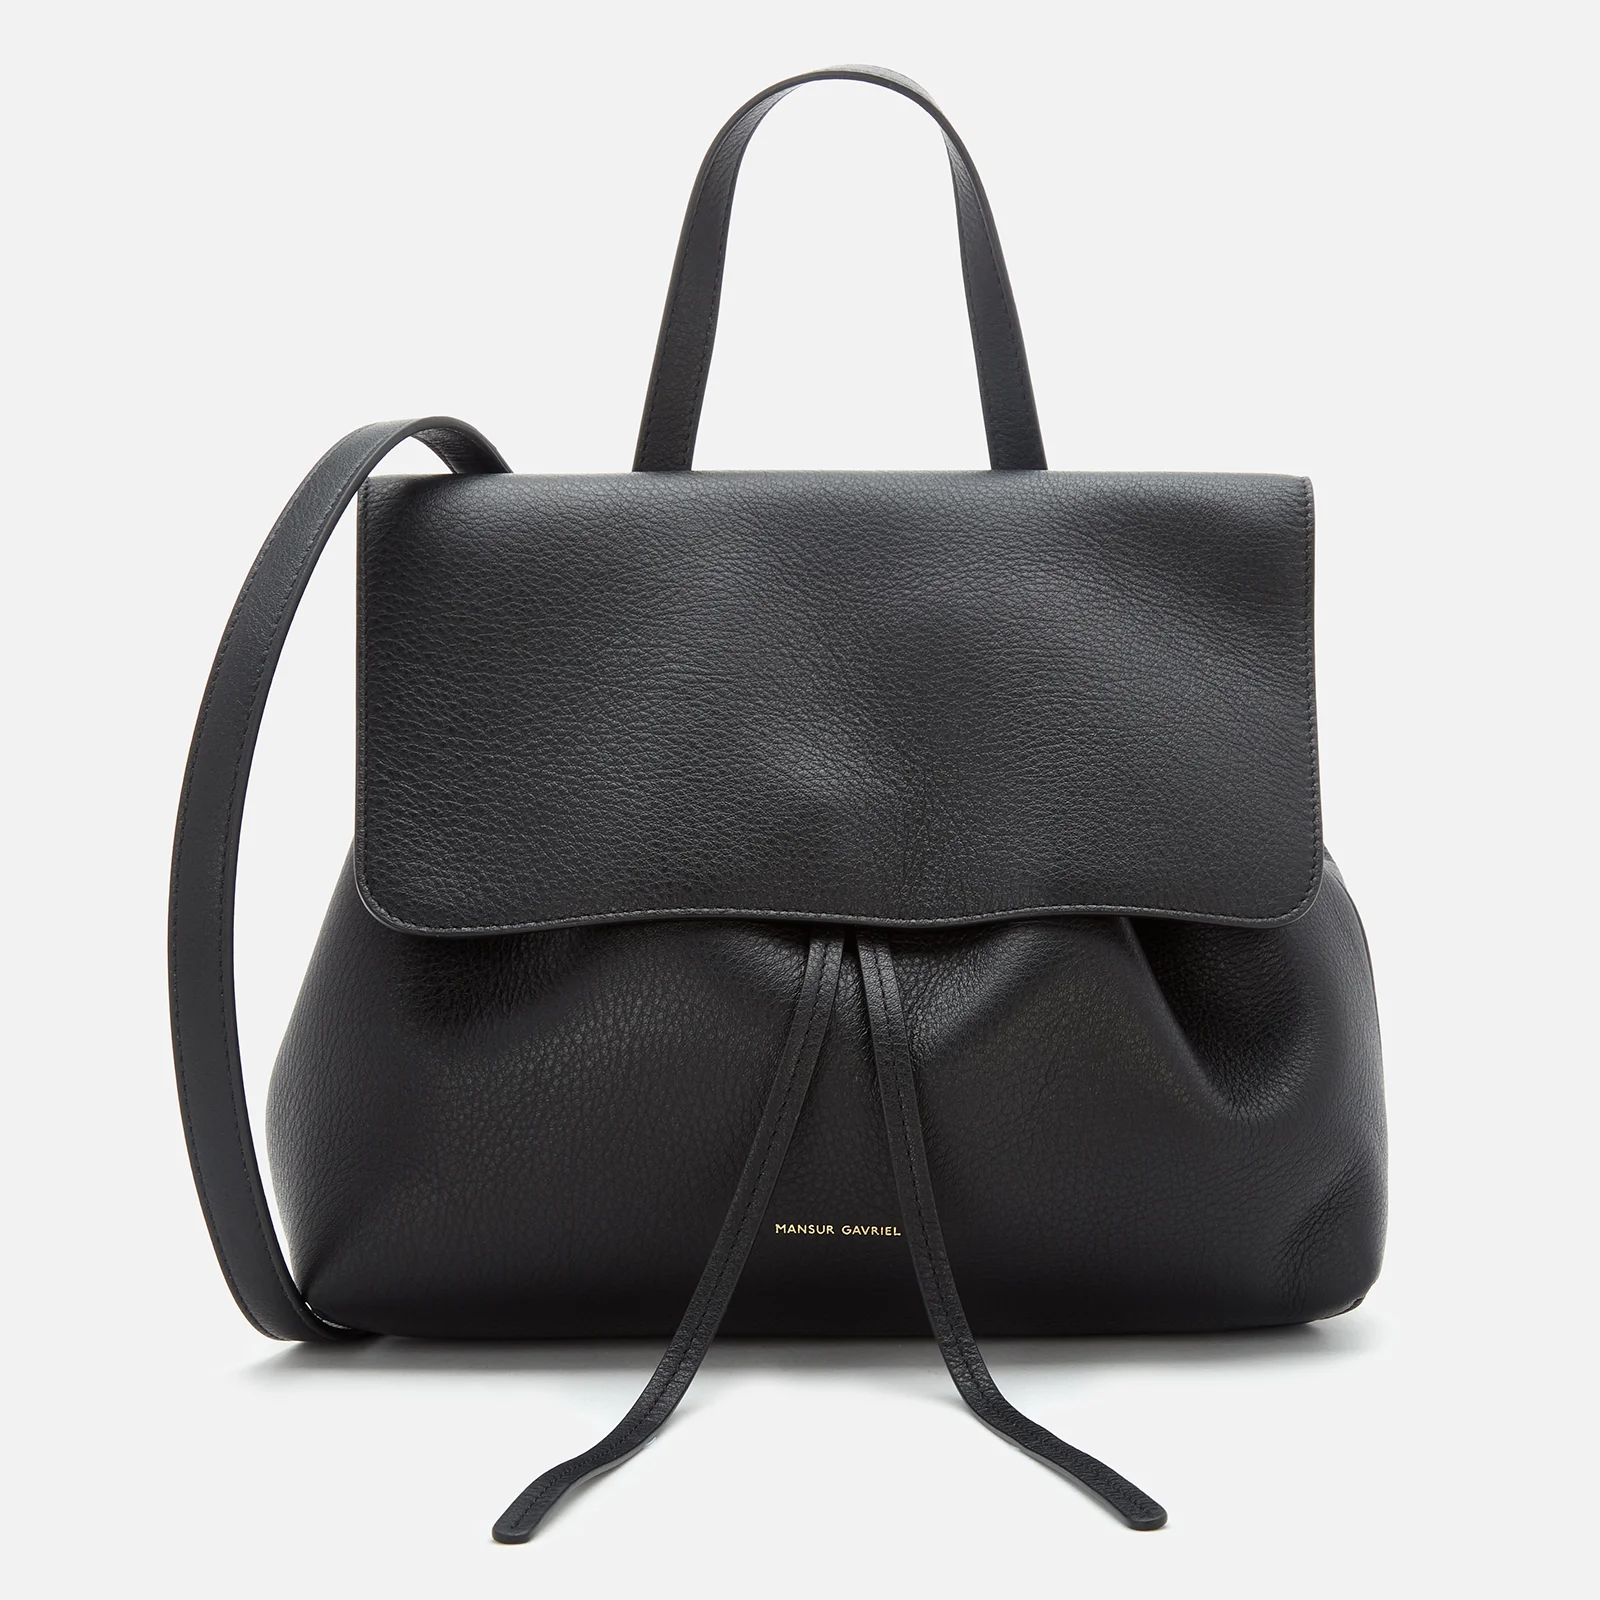 Mansur Gavriel Women's Soft Lady Bag - Black Image 1